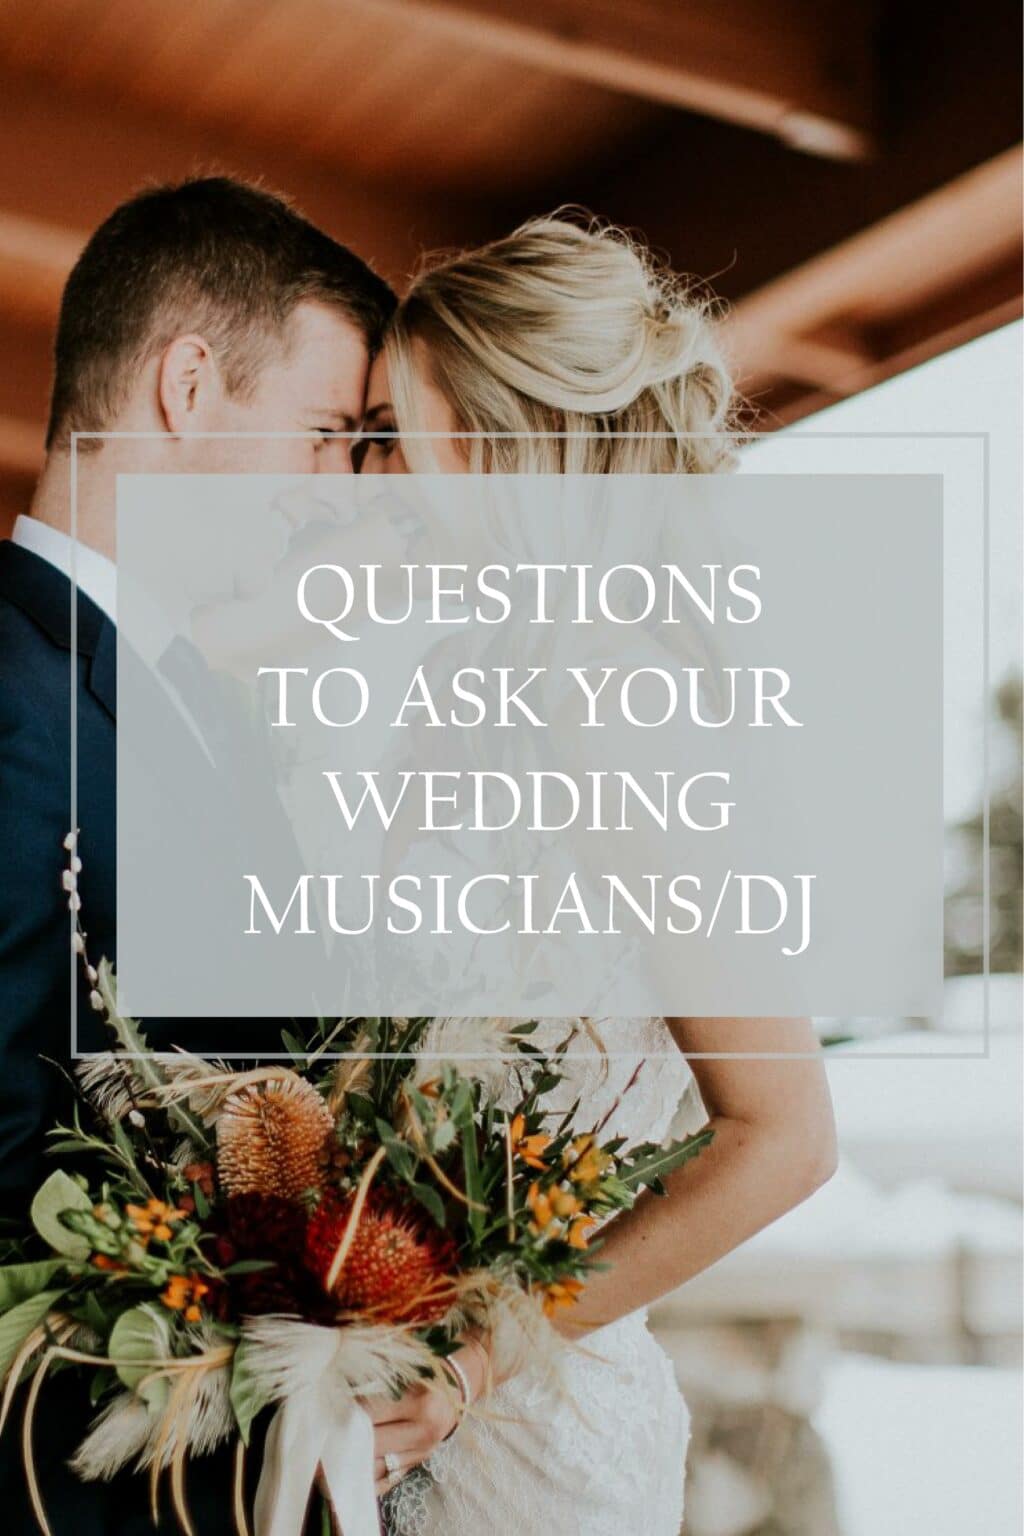 Sneak Peek 8 Questions to Ask Your Wedding Musicians/DJ